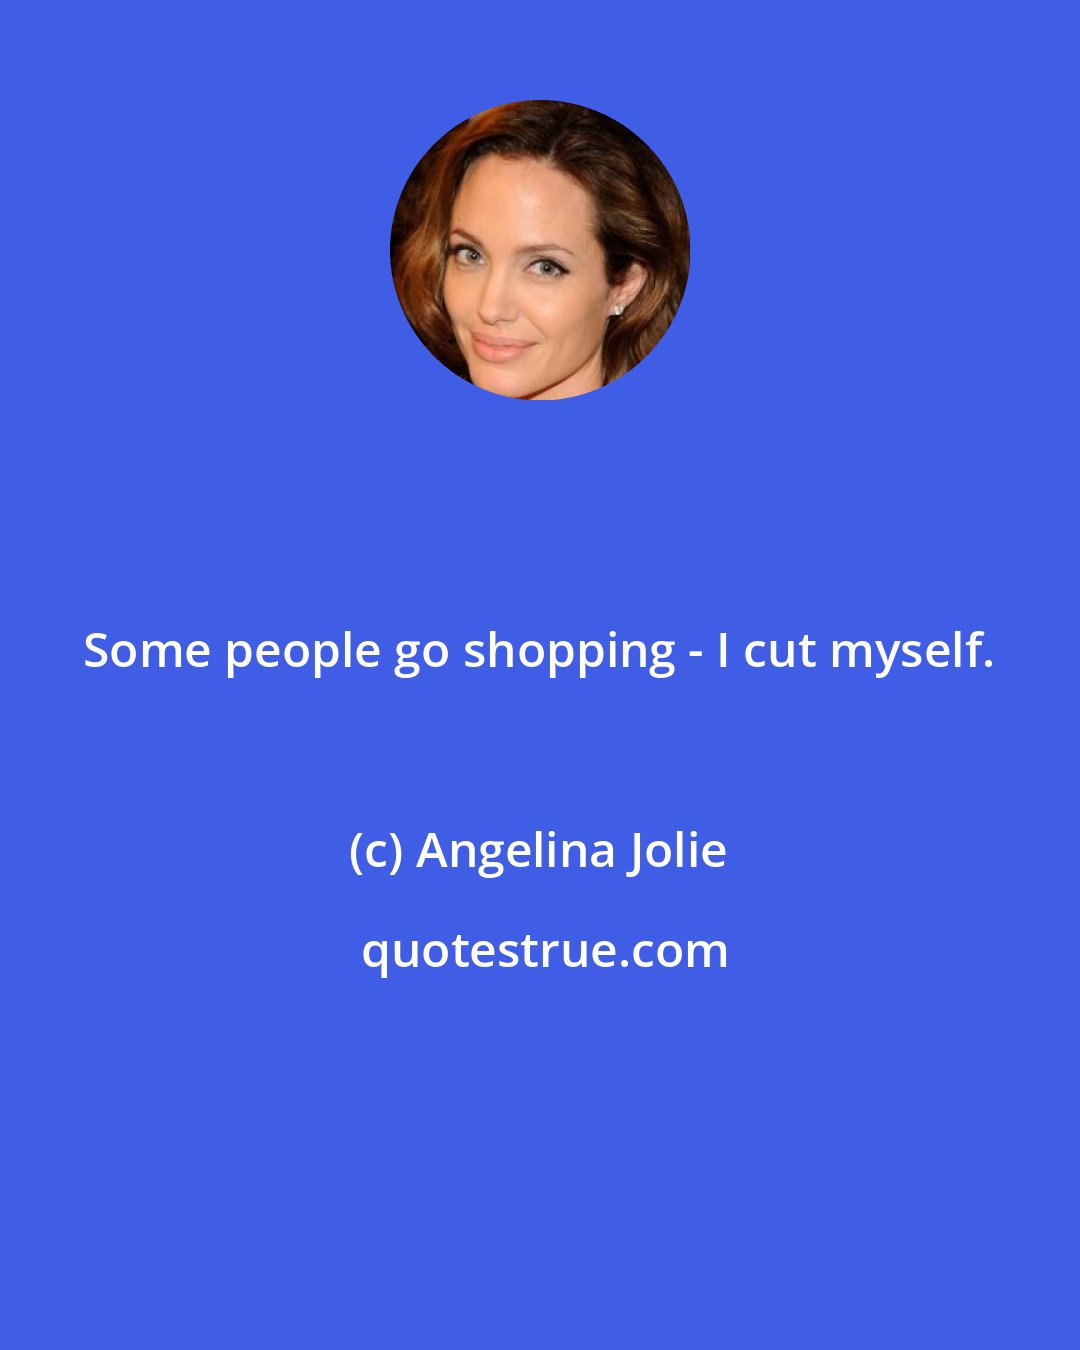 Angelina Jolie: Some people go shopping - I cut myself.